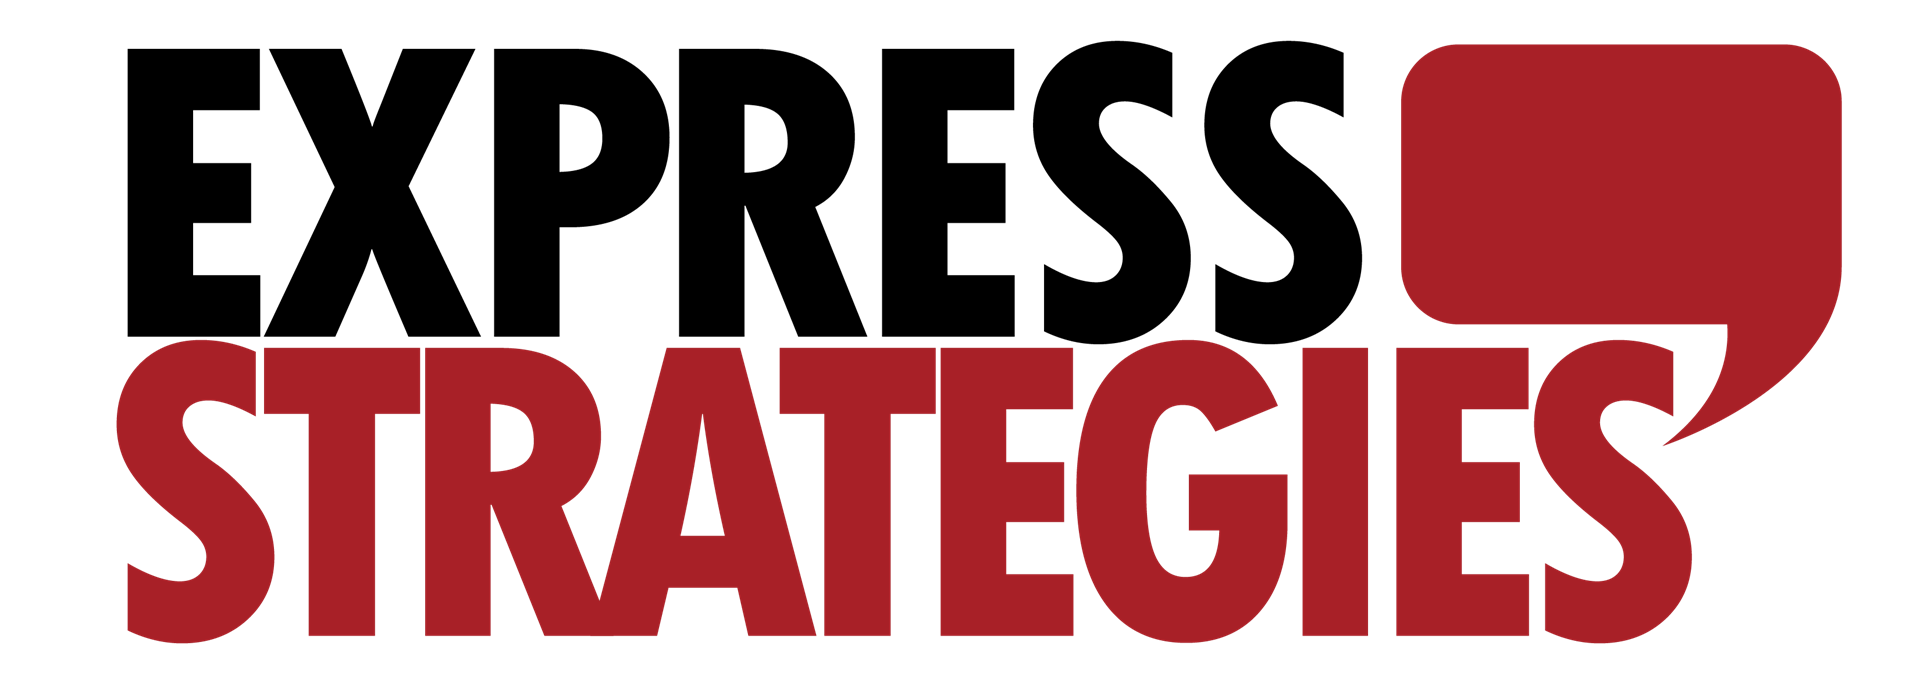 Express Strategies logo